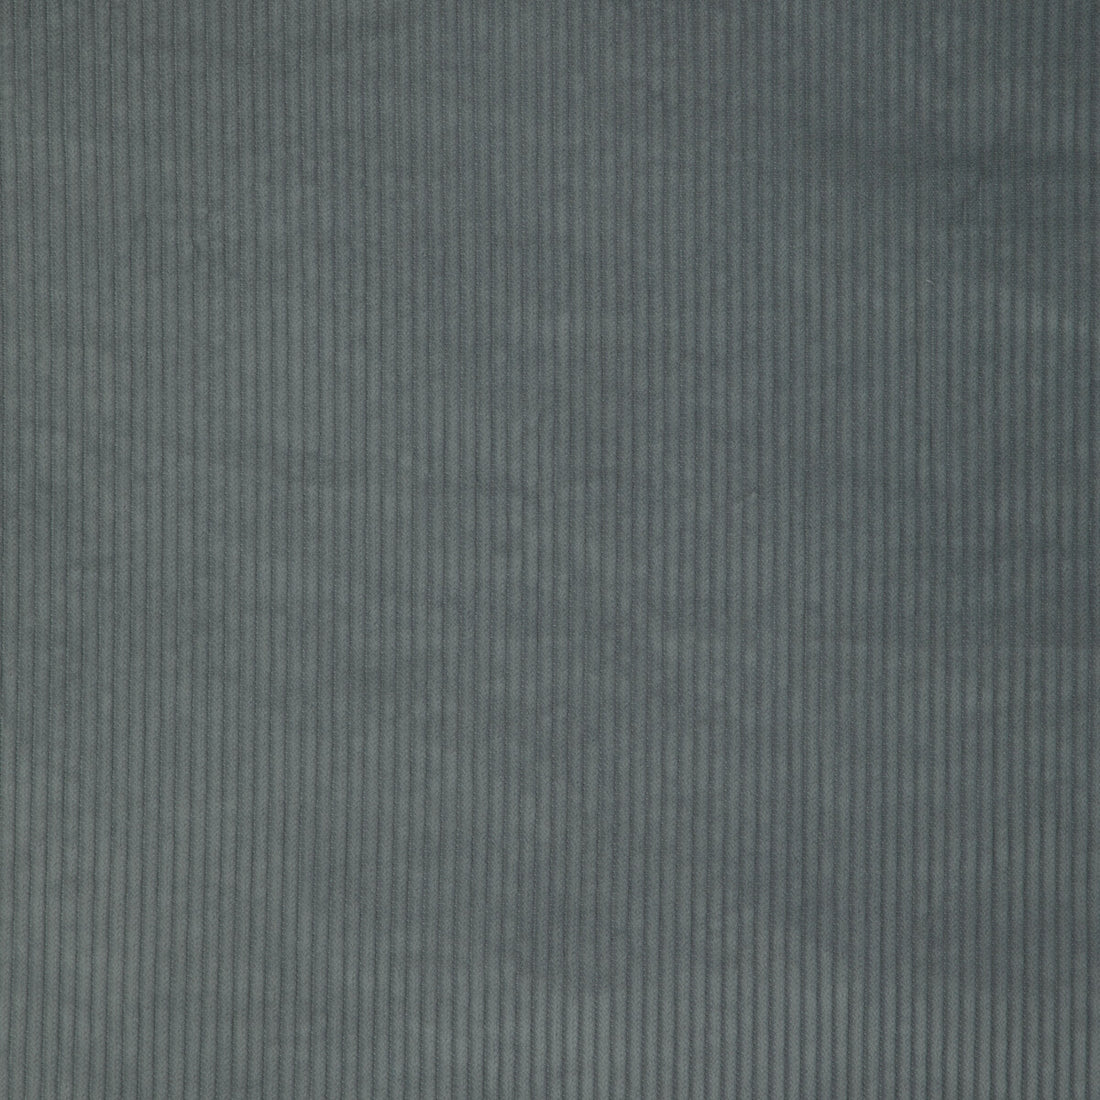 Kravet Smart fabric in 37006-52 color - pattern 37006.52.0 - by Kravet Smart